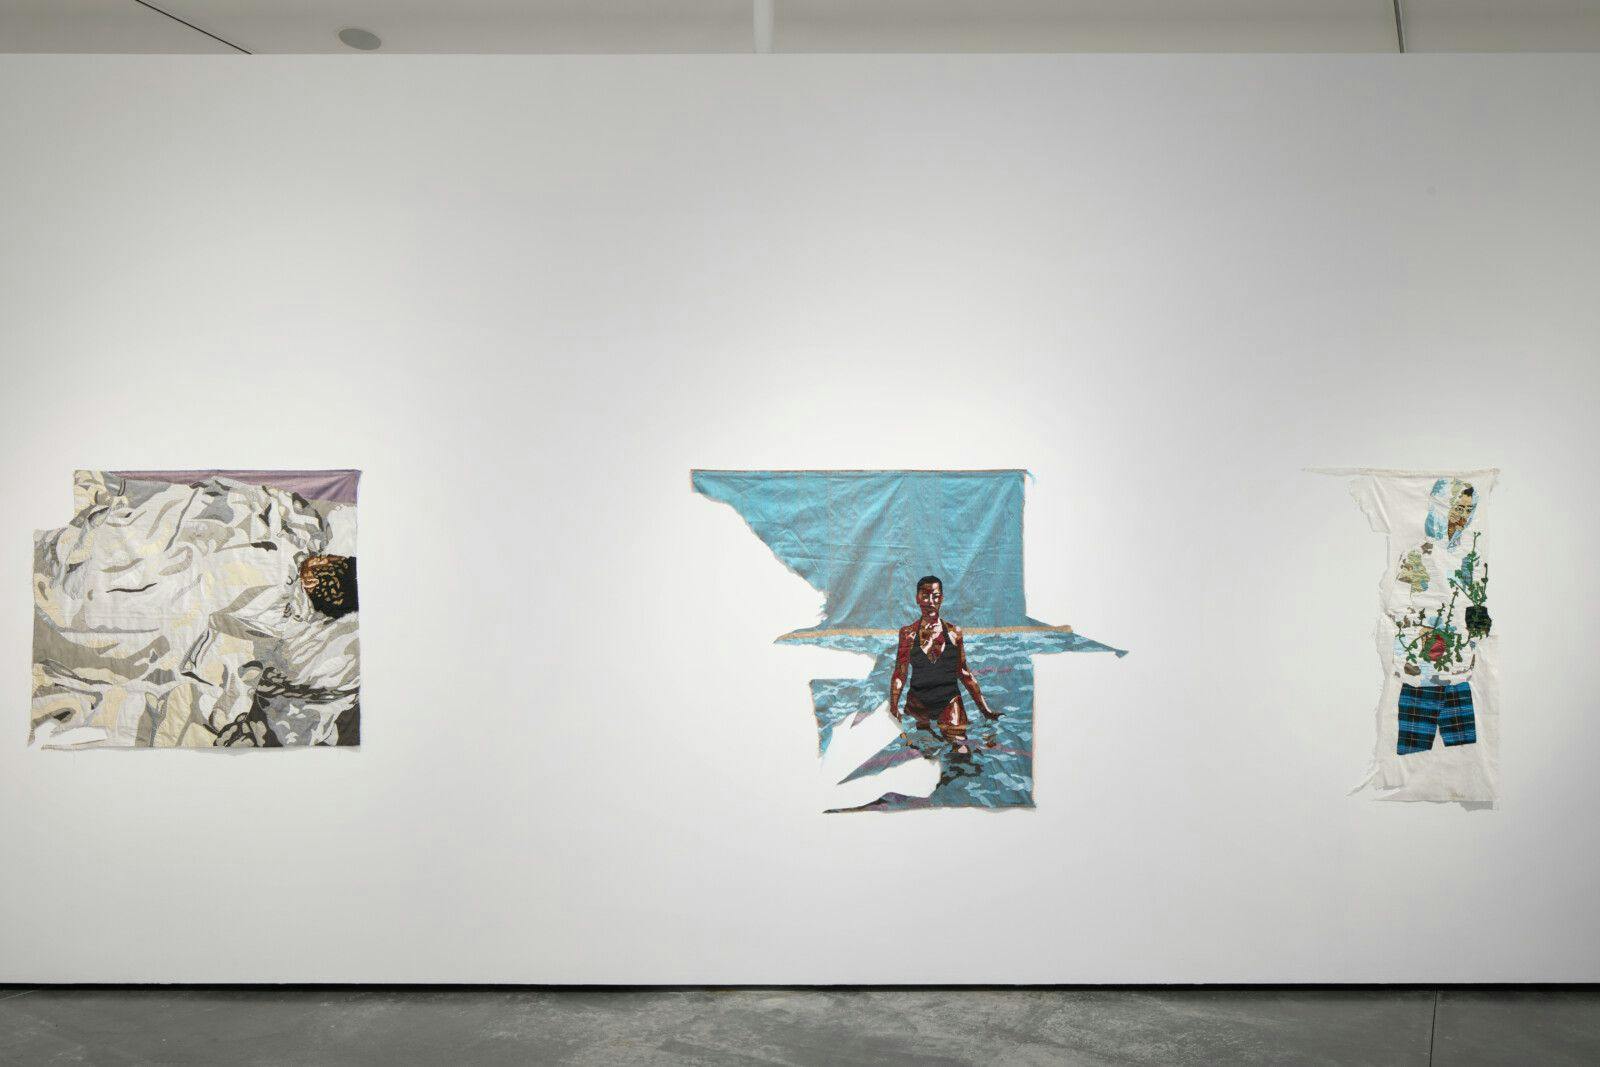 Billie Zengawa, “A Vivid Imagination” via the artist and Lehmann Maupin, New York, Hong Kong, Seoul, and London